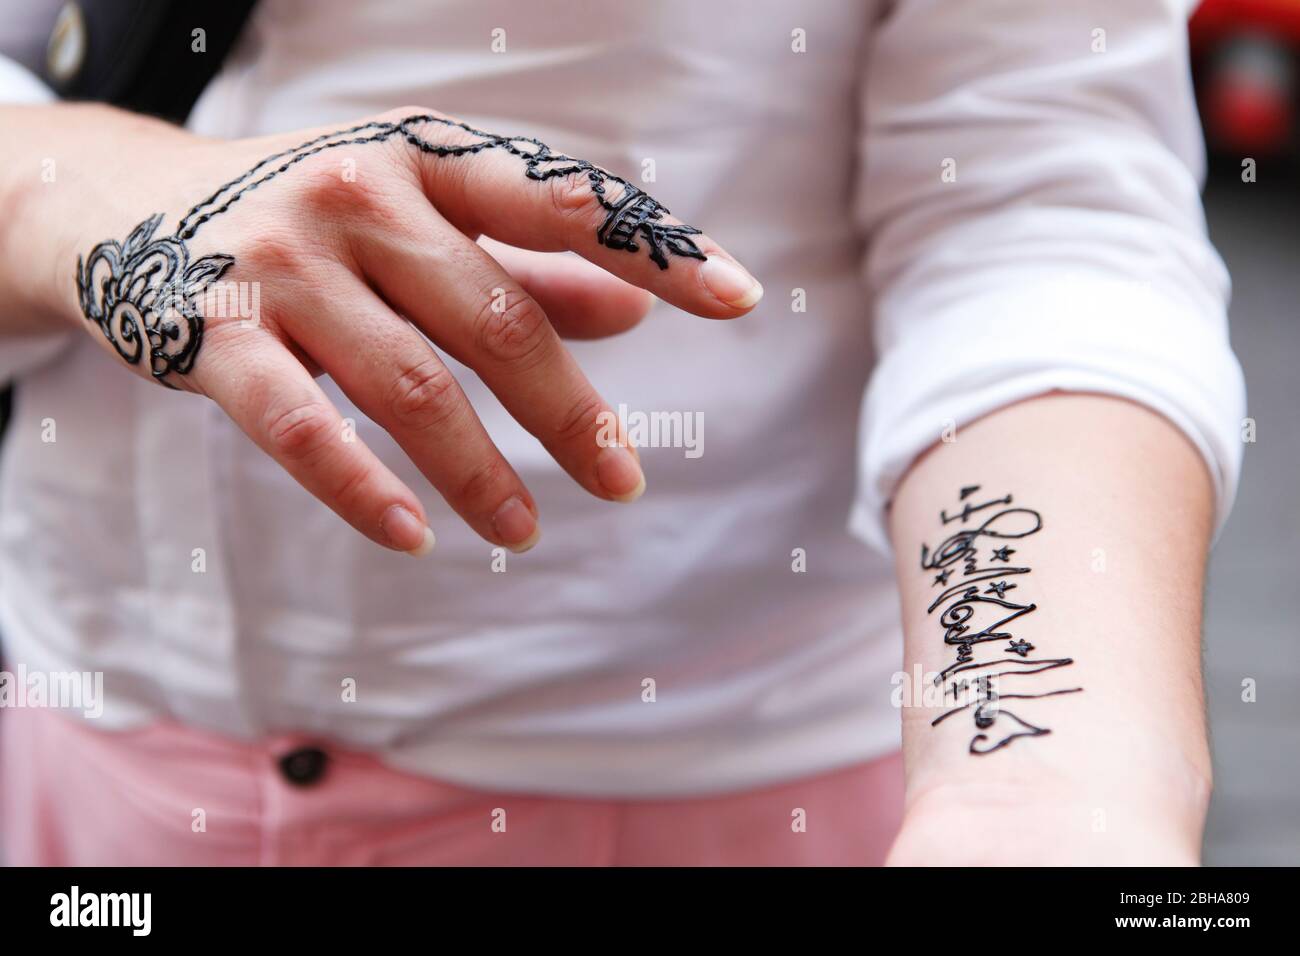 Details 92 about allah tattoo designs best  indaotaonec